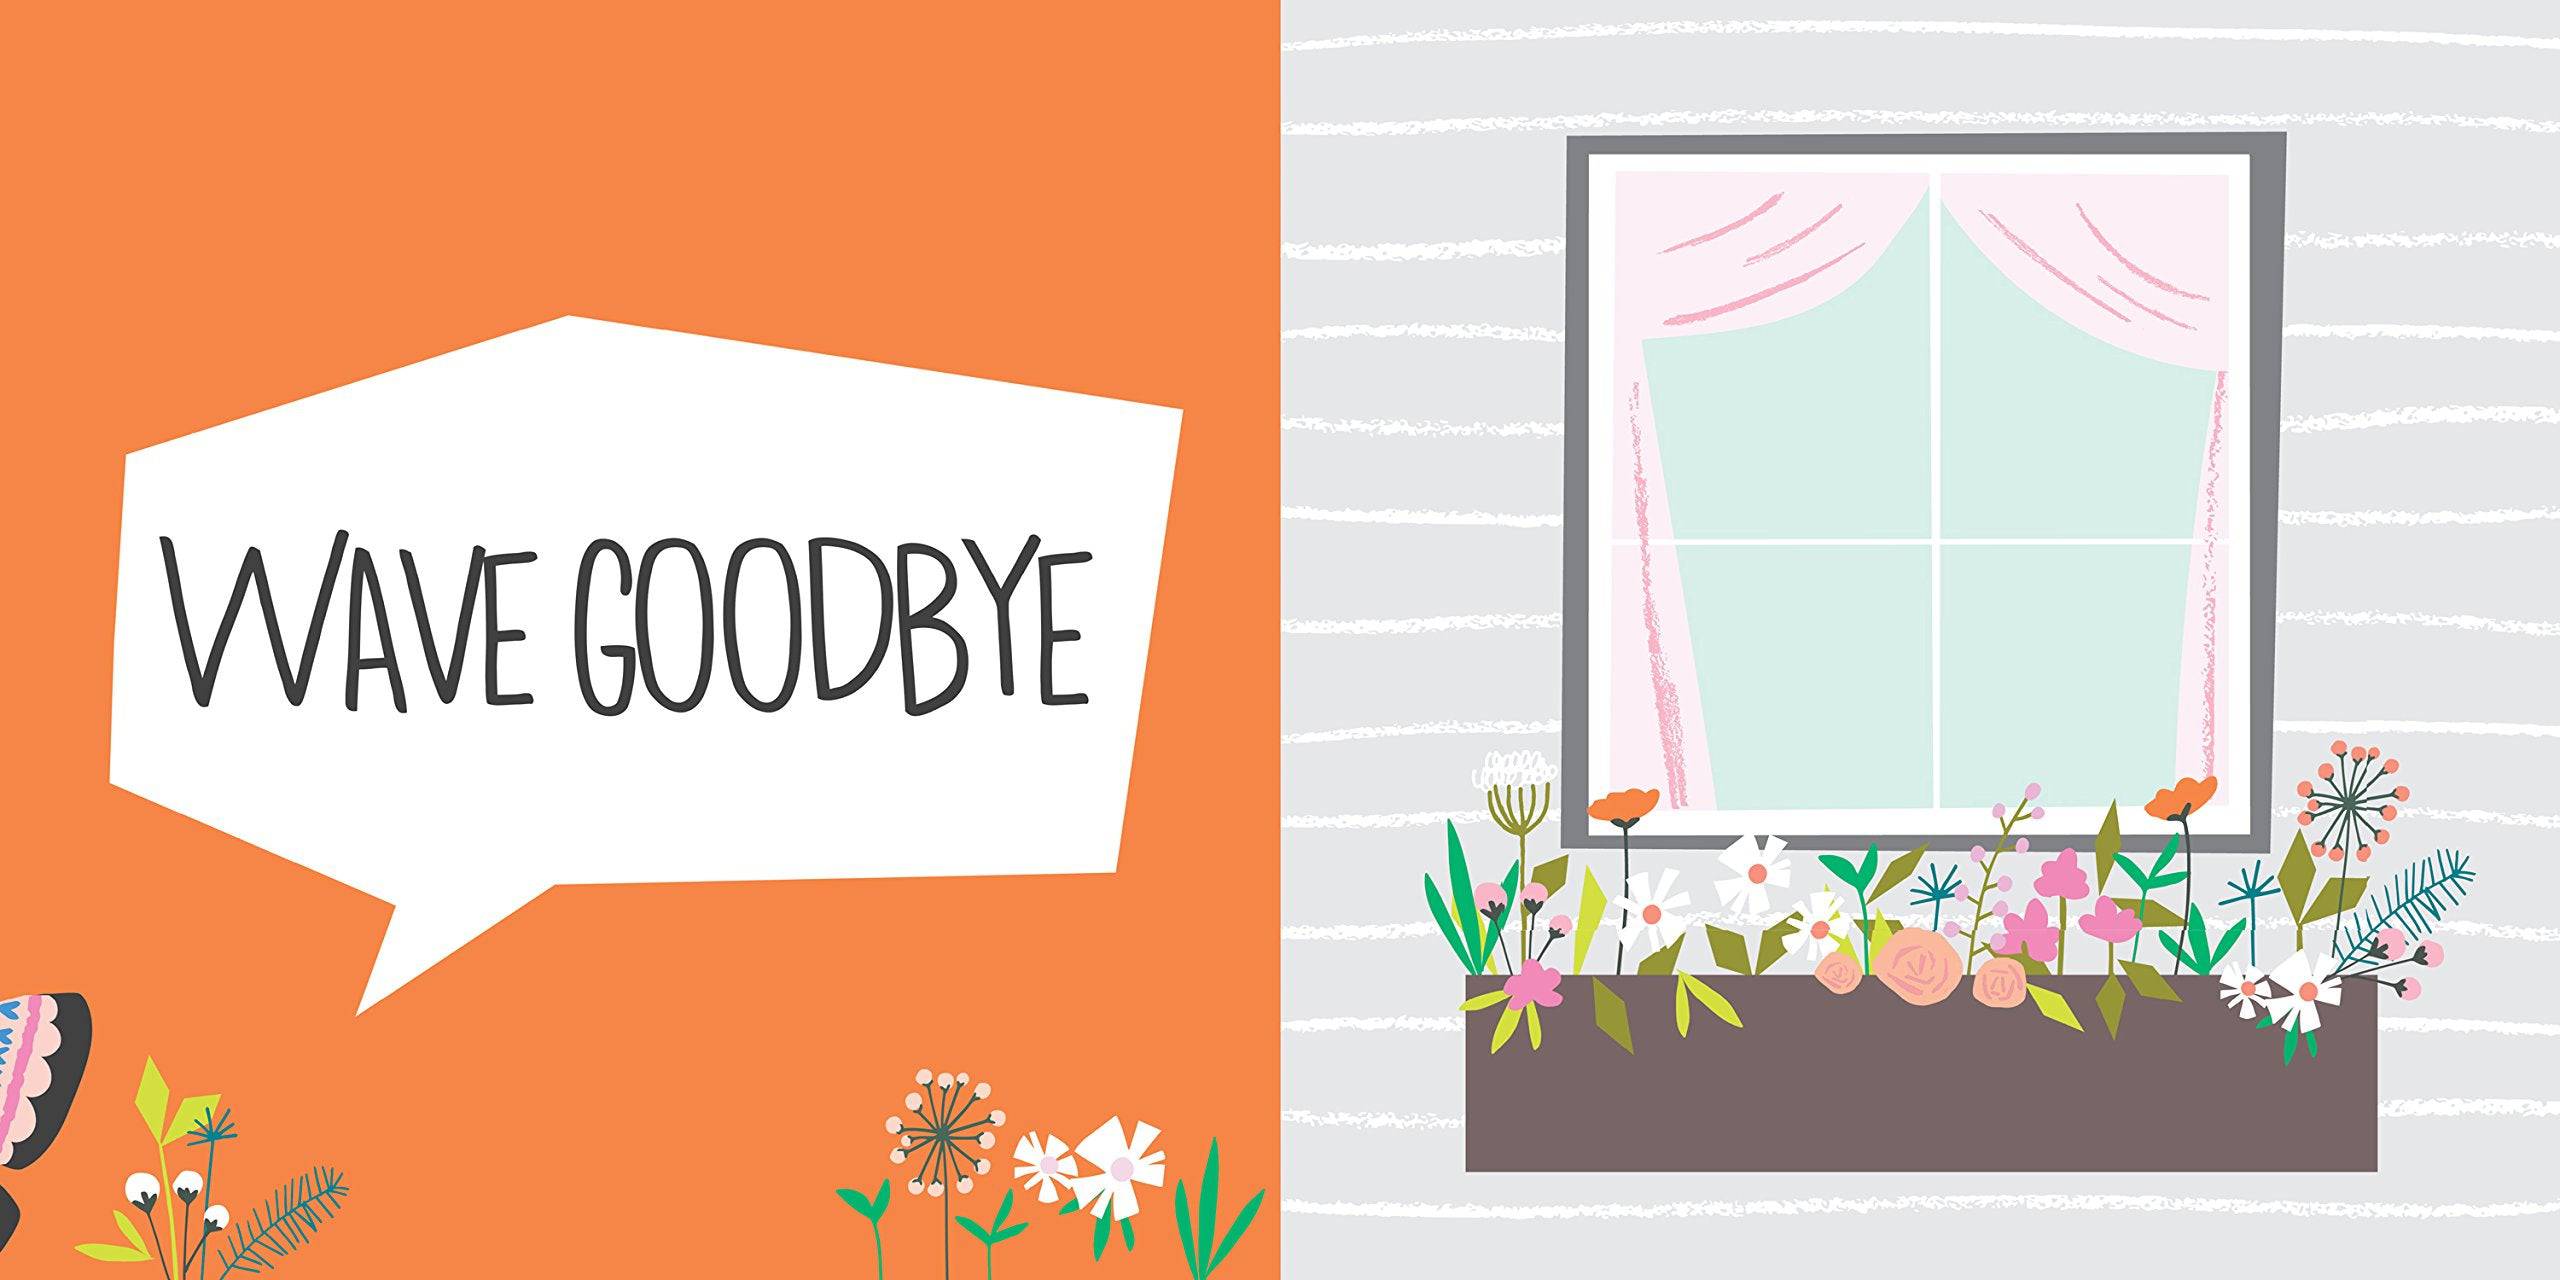 Gotta Go, Buffalo: A Silly Book of Fun Goodbyes - Twinkle Twinkle Little One